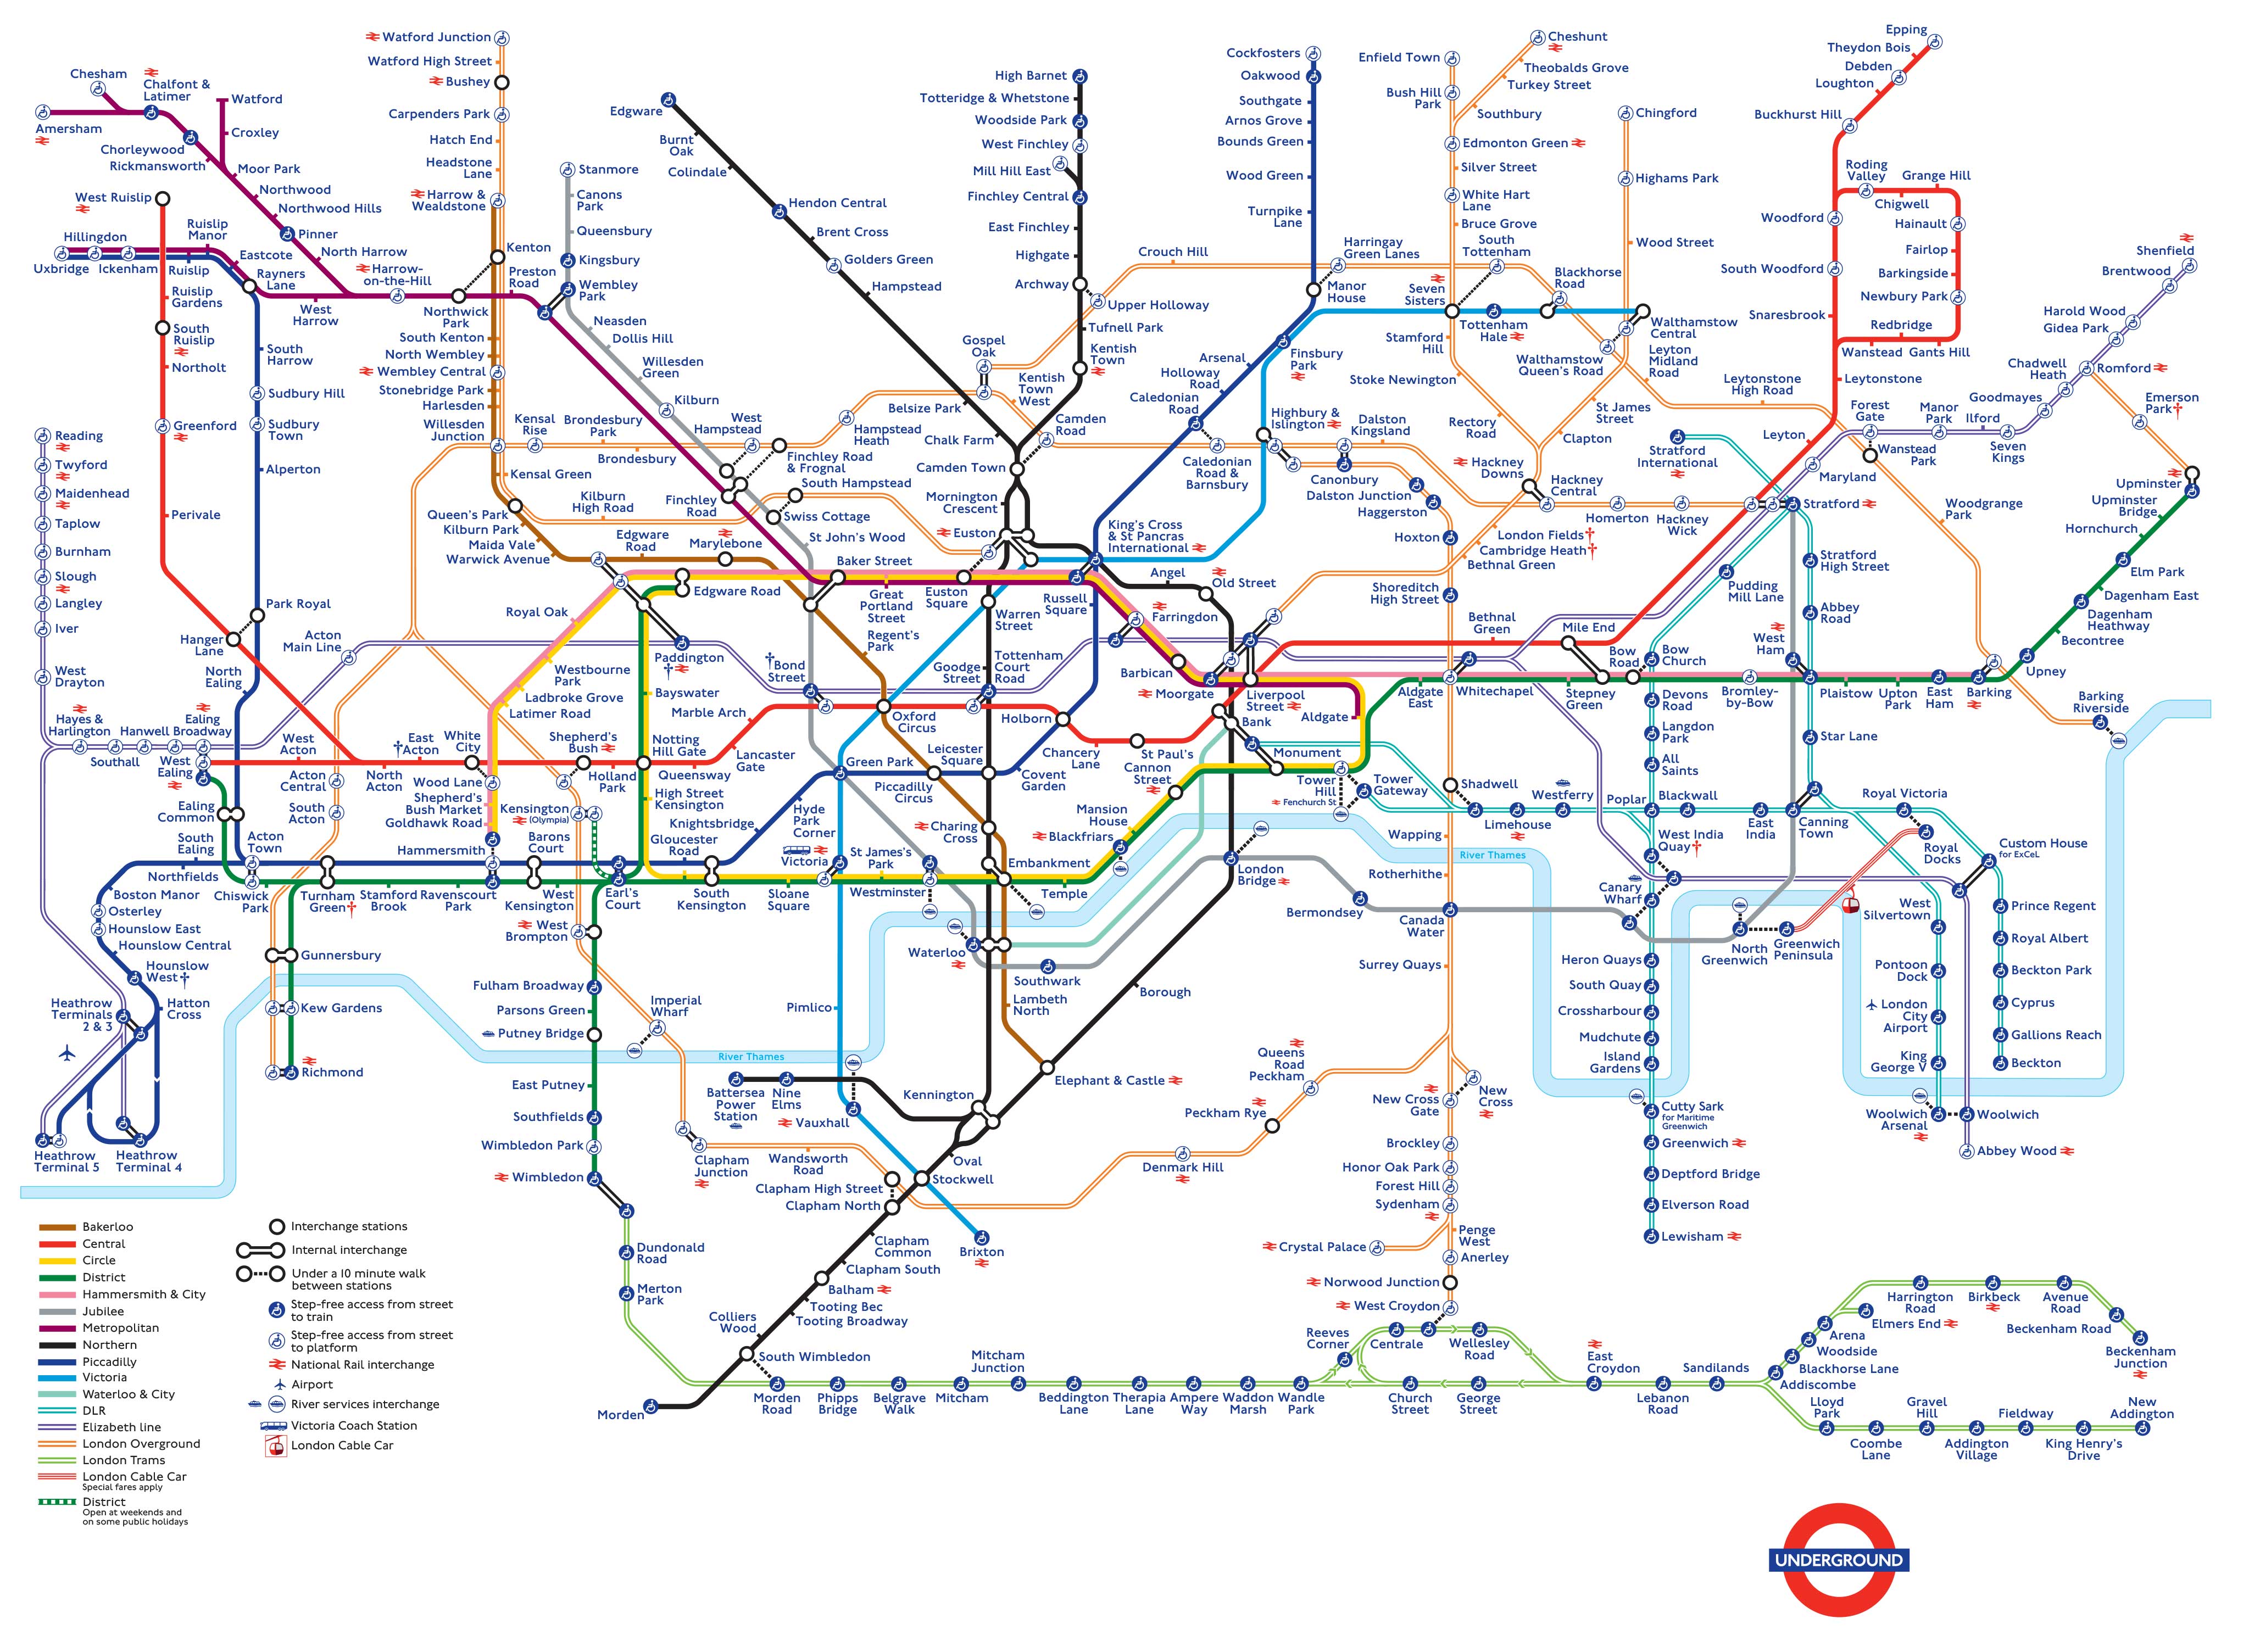 london-underground-tube-map-wallpaper